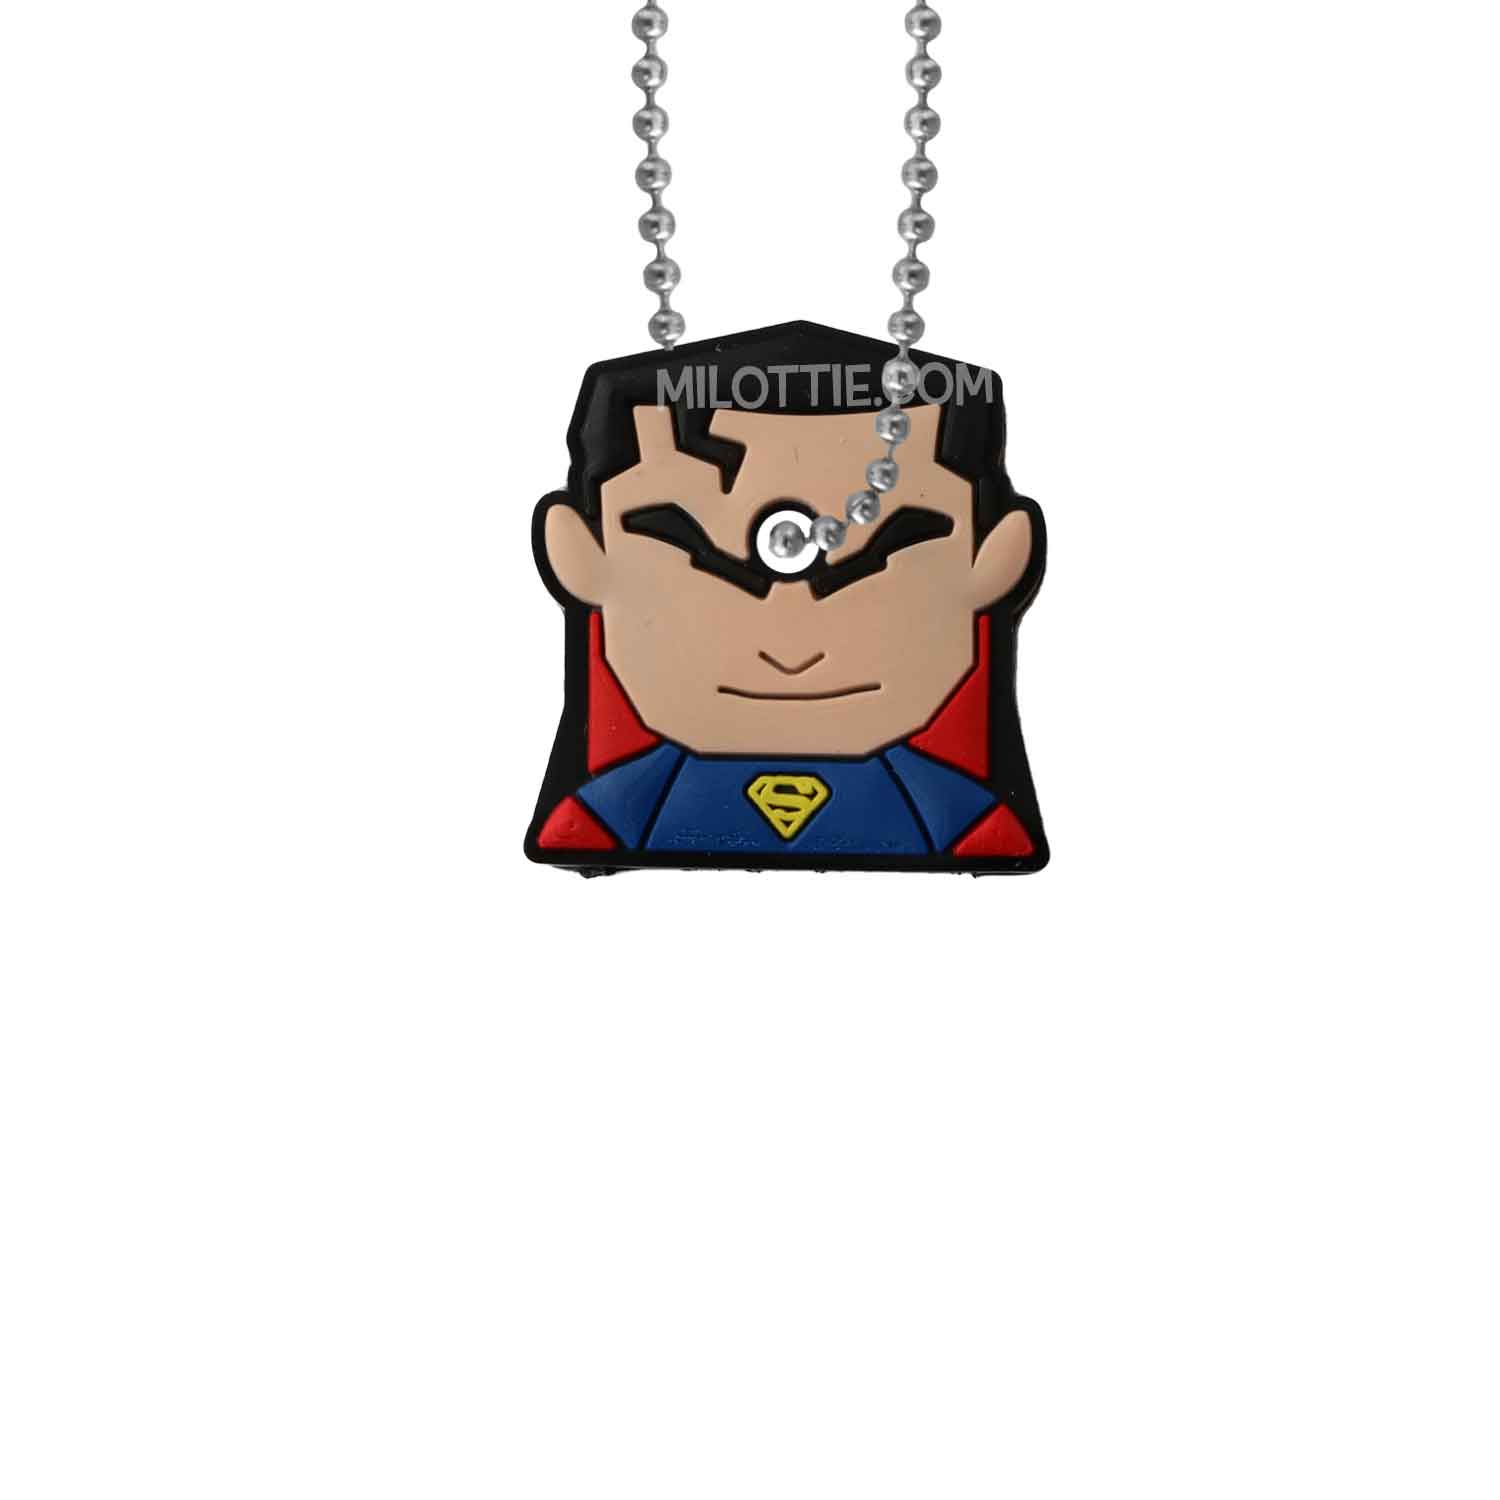 superman key cap - Milottie